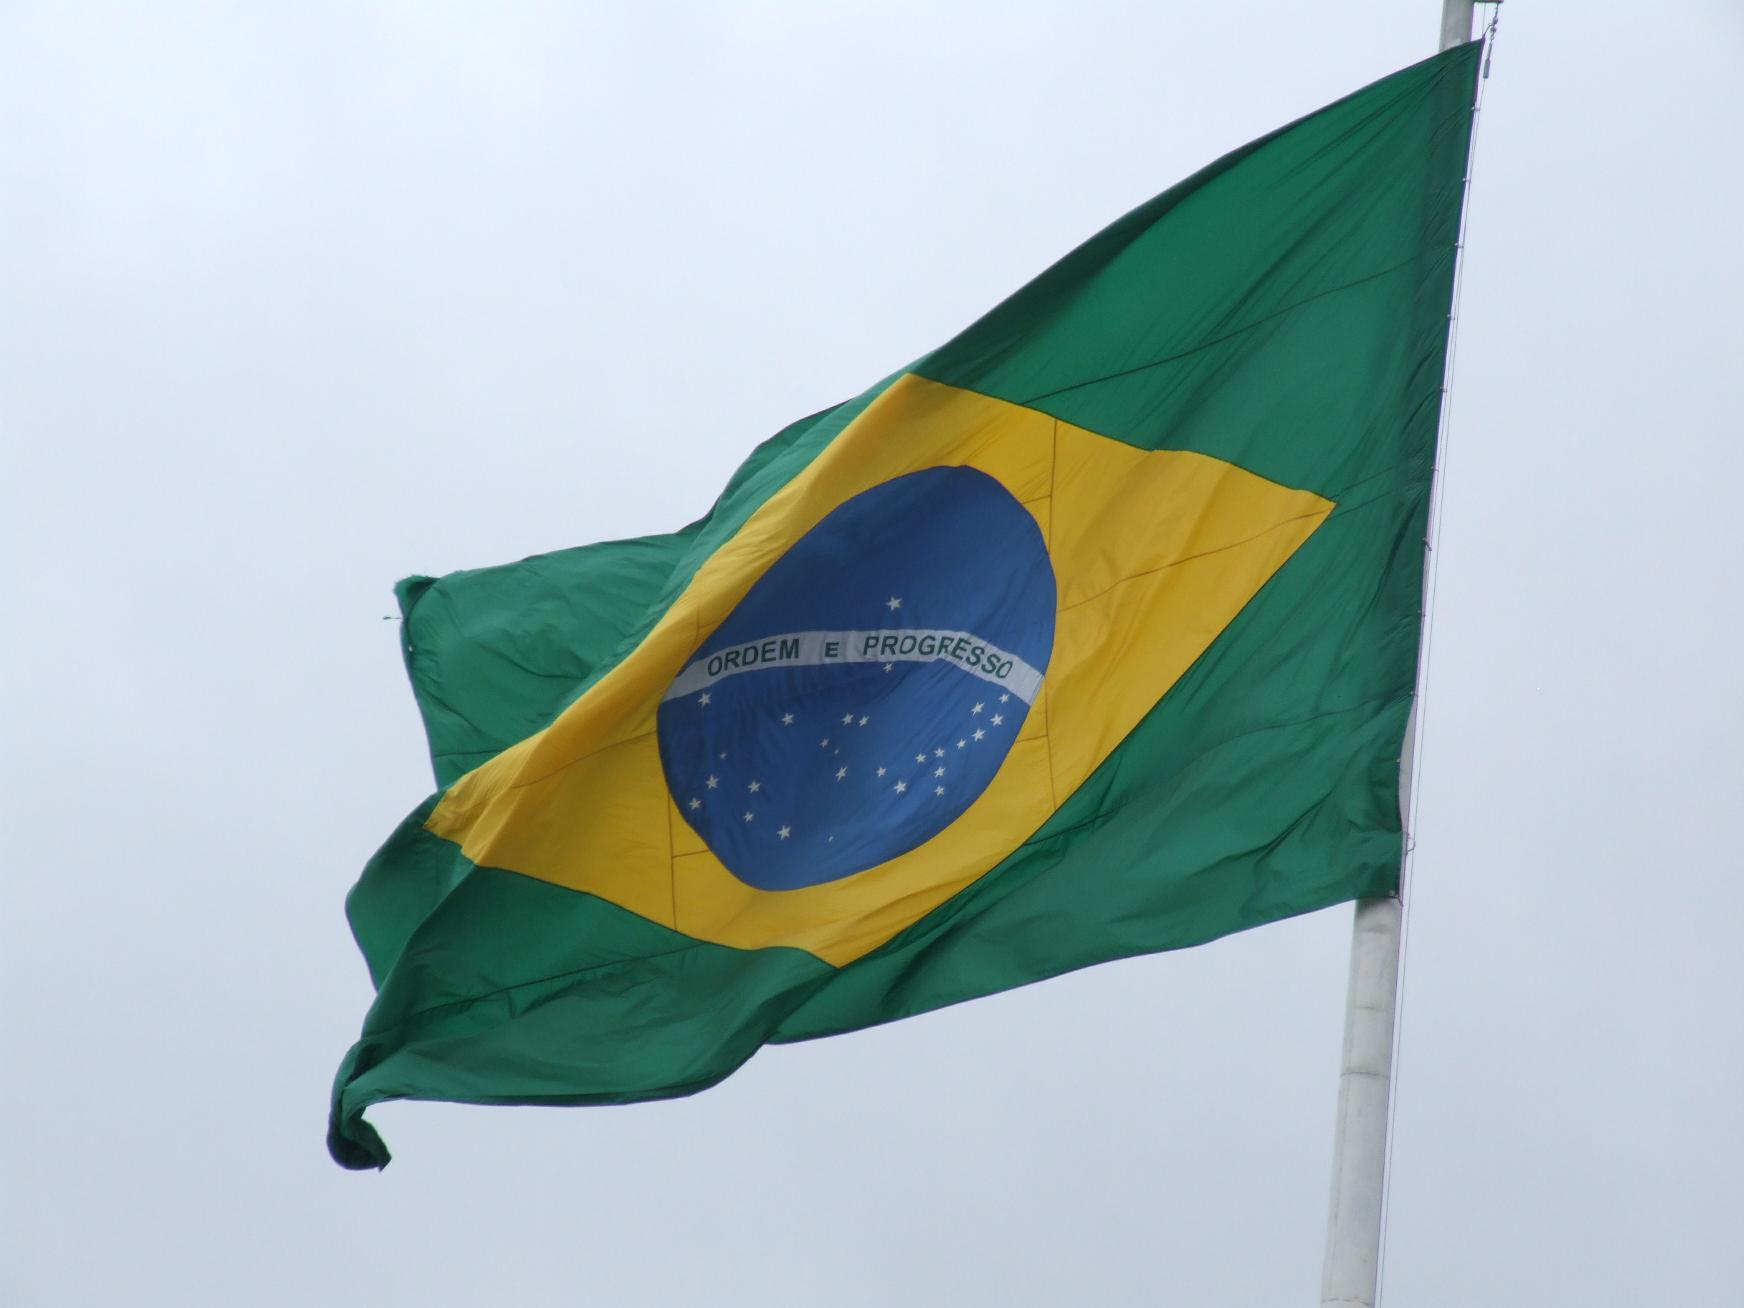 Vila Galé candidata-se a gerir hotel em Brasília